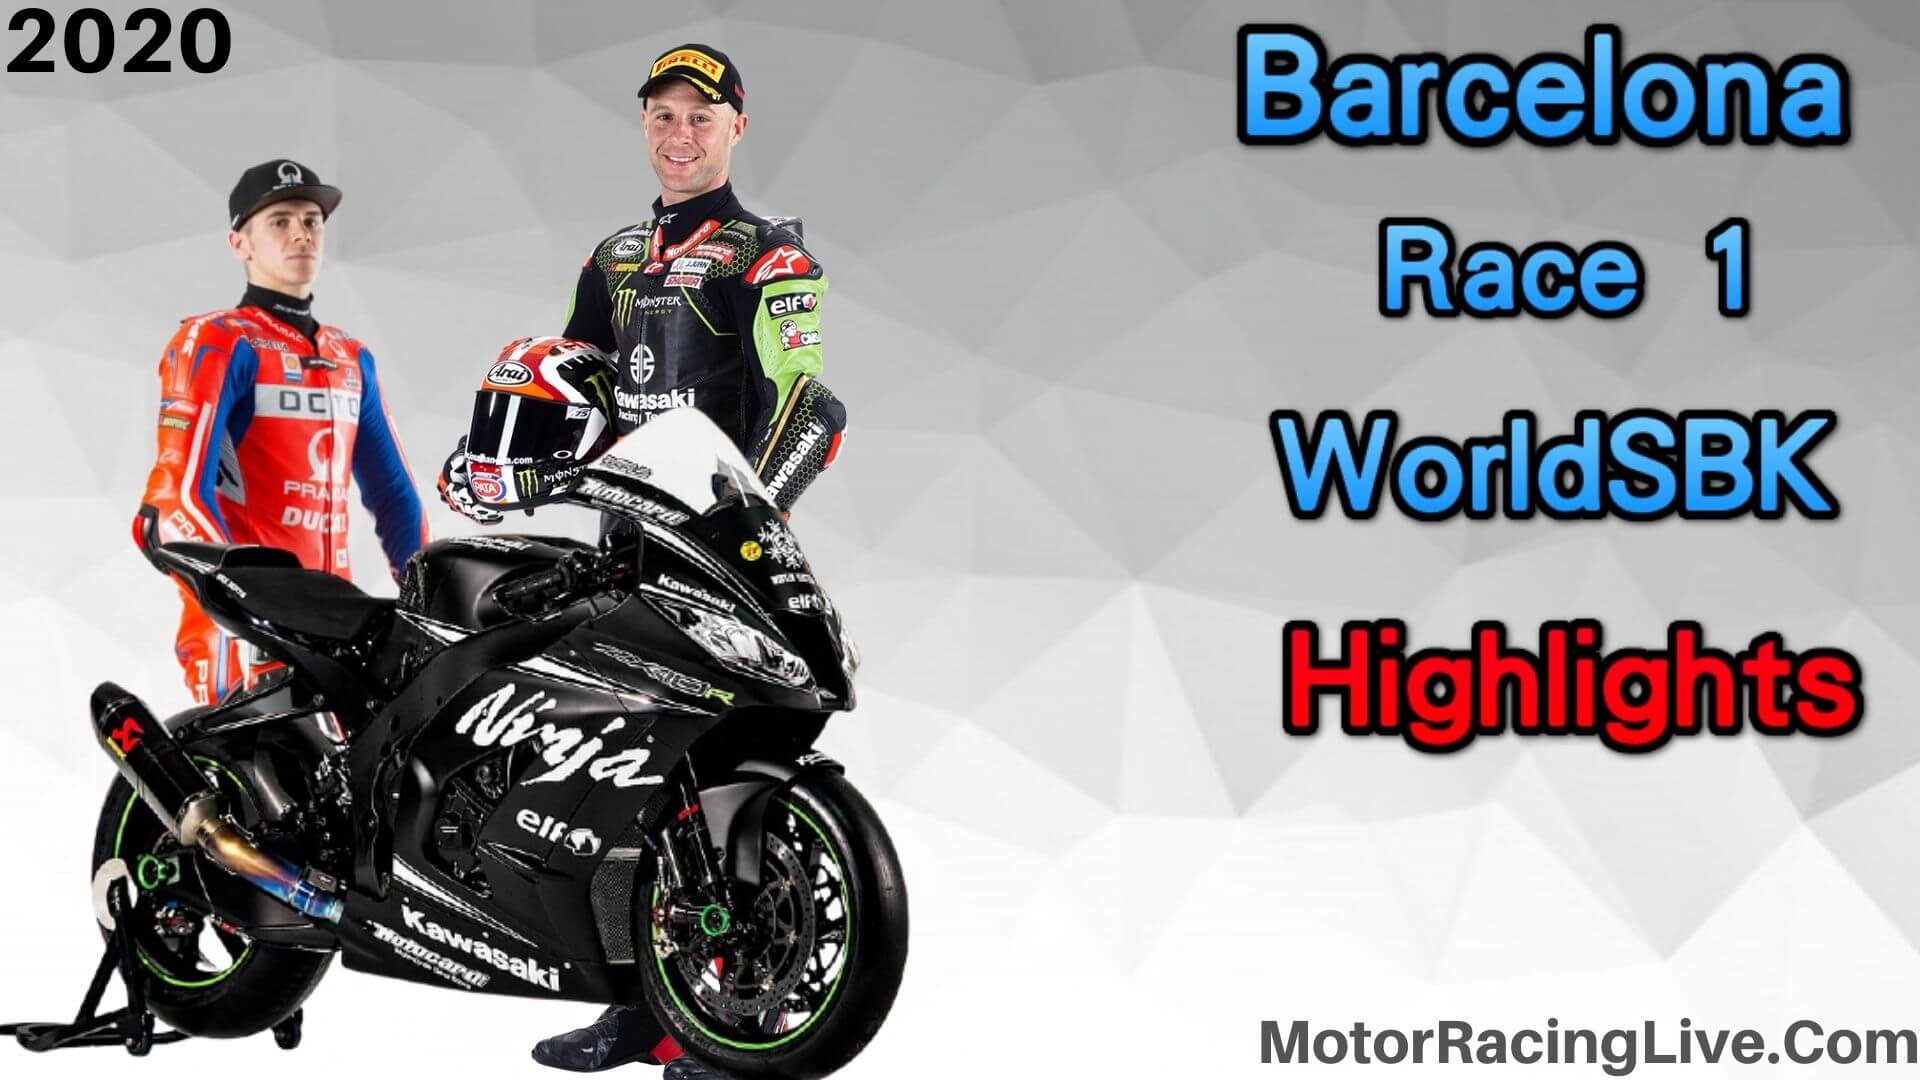 Barcelona Race 1 Highlights WorldSBK 2020